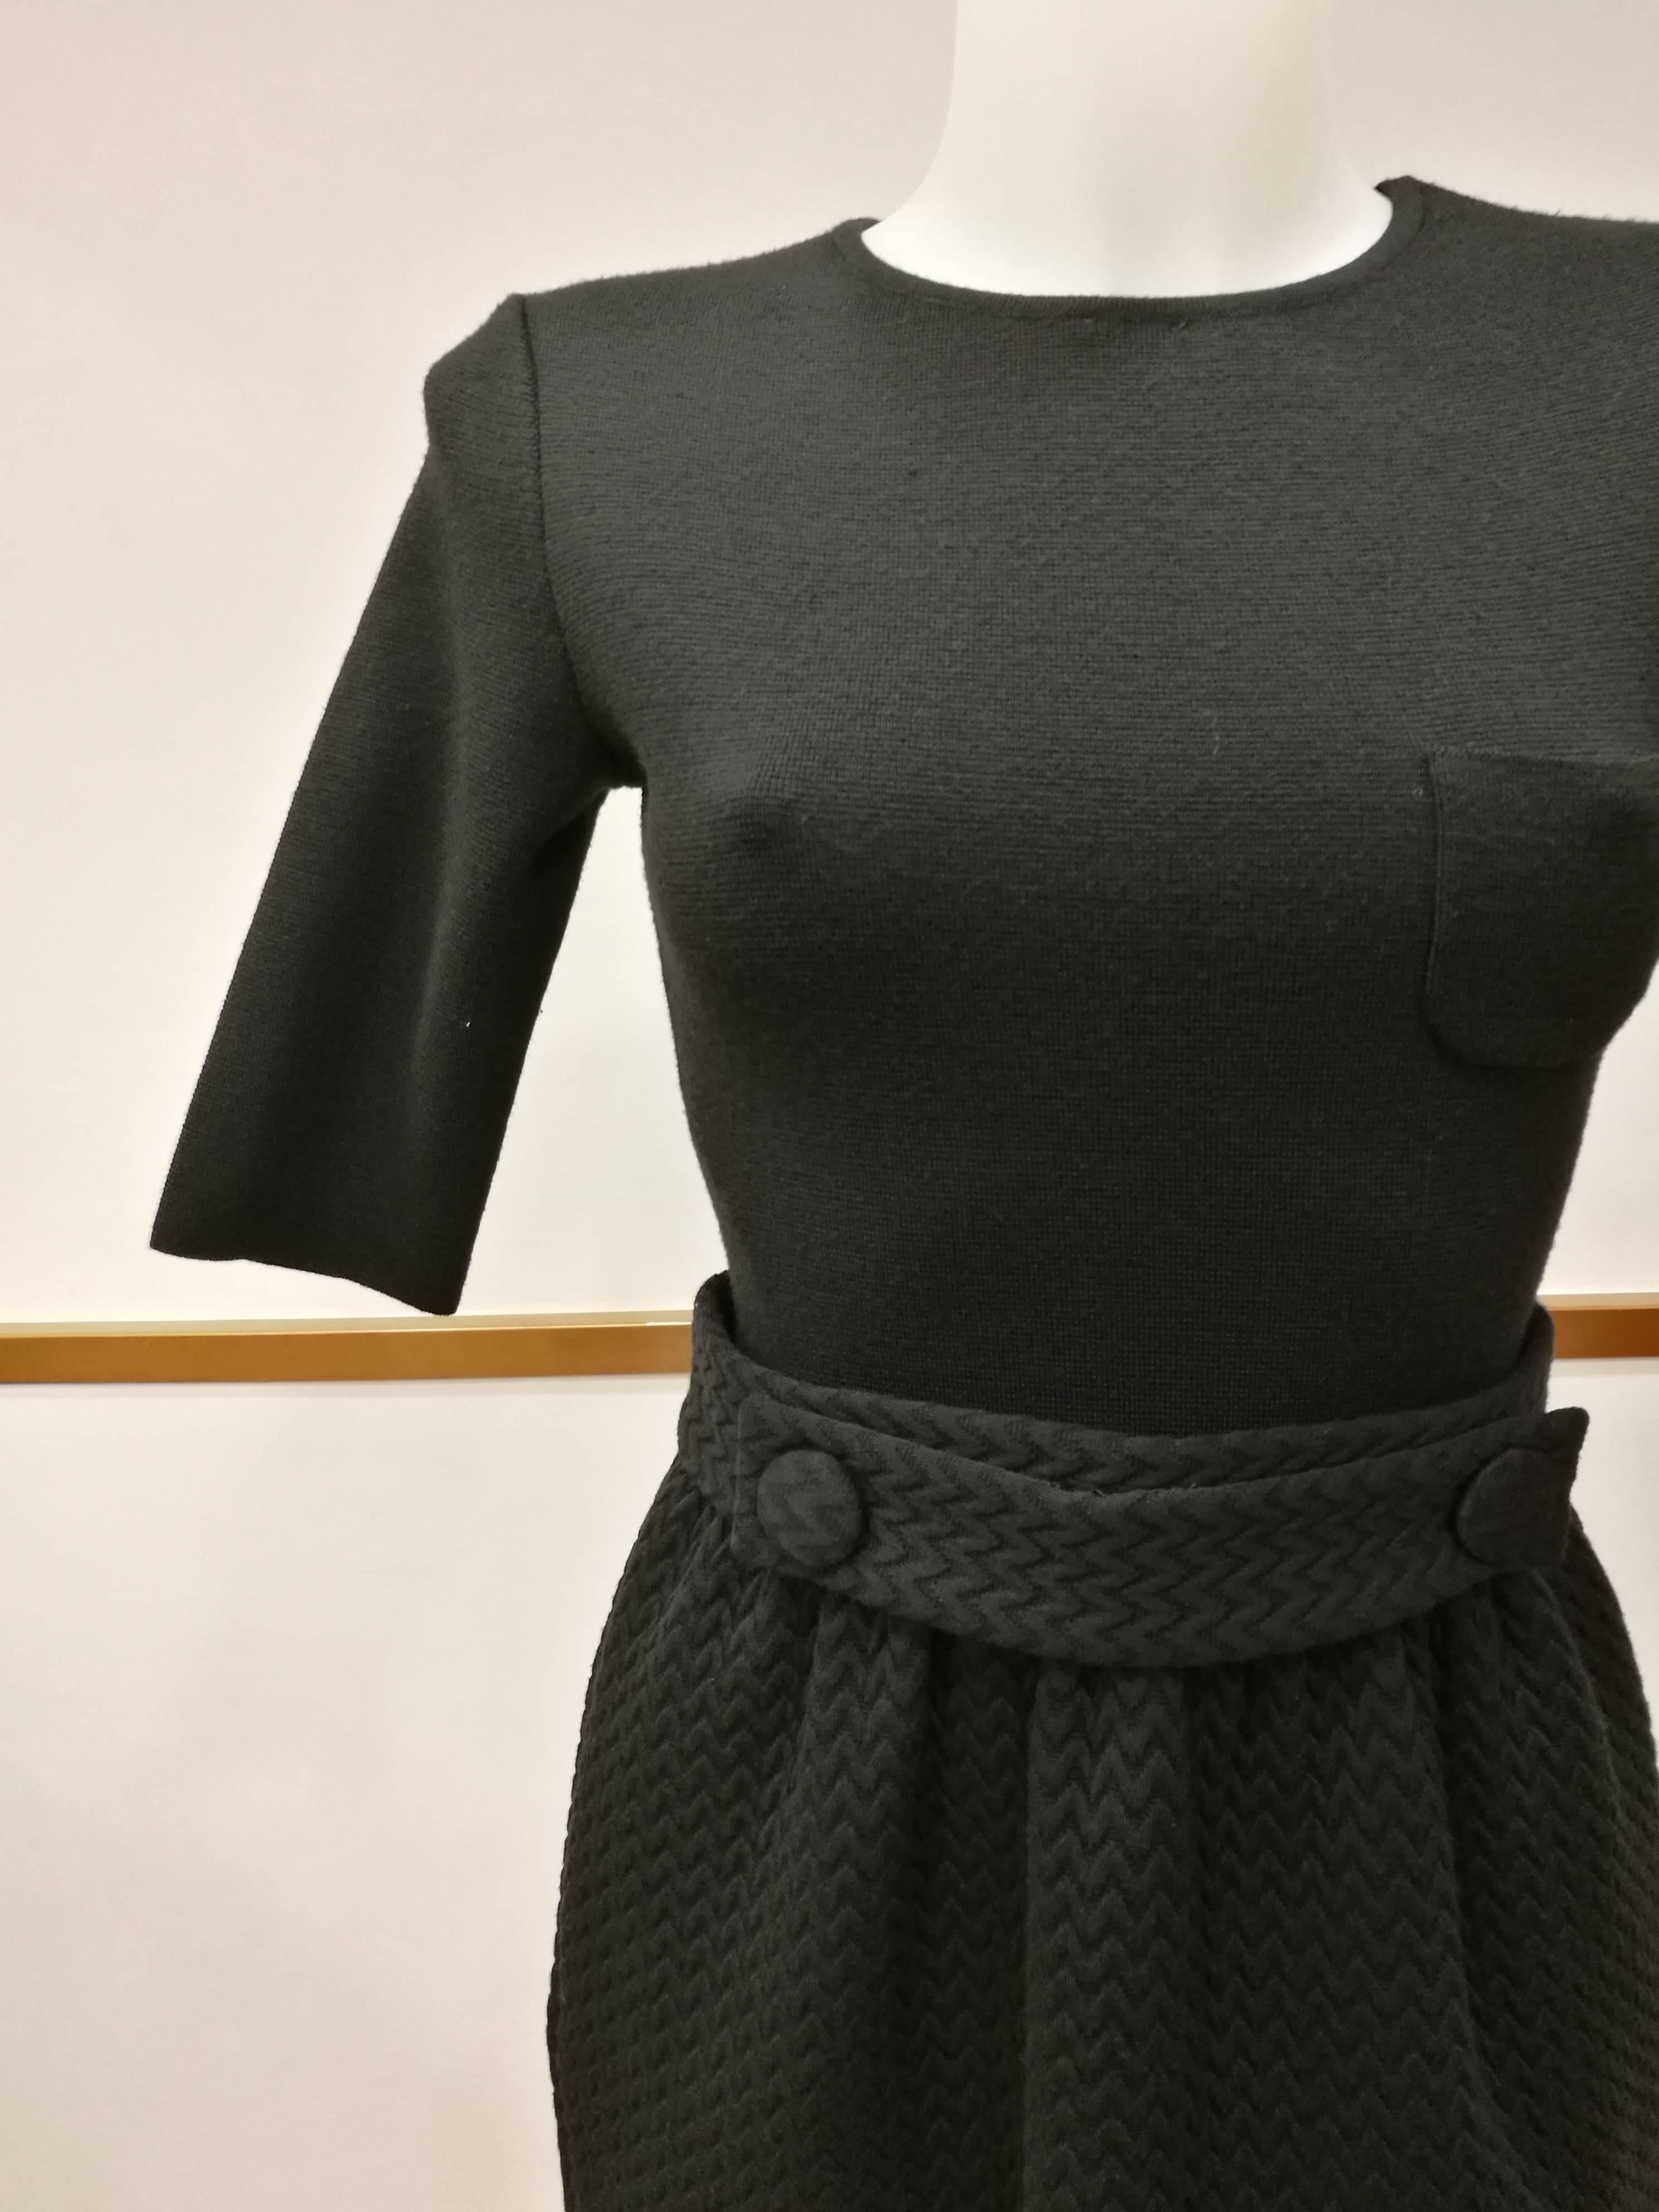 M by Missoni Black Silk Cotton Dress In Excellent Condition For Sale In Capri, IT